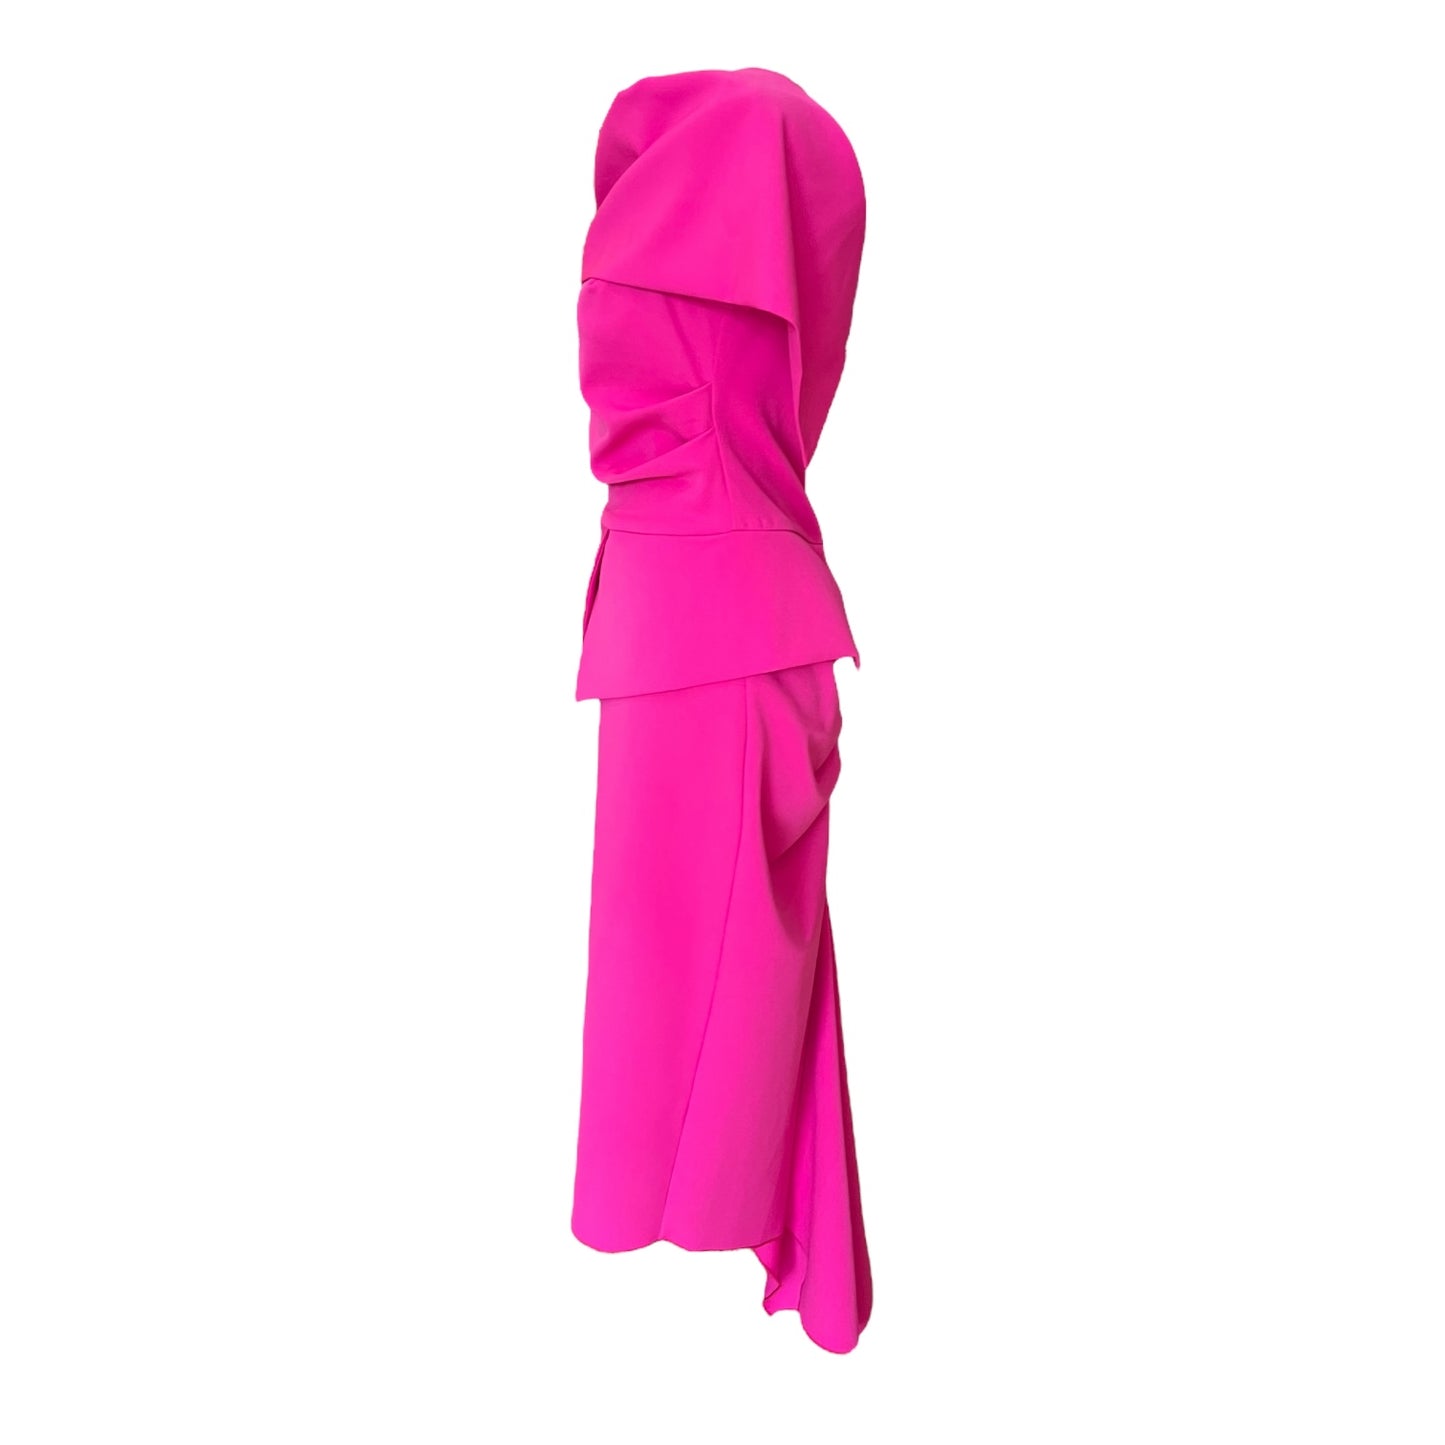 Kevan Jon Cerise Pink Dress - 12